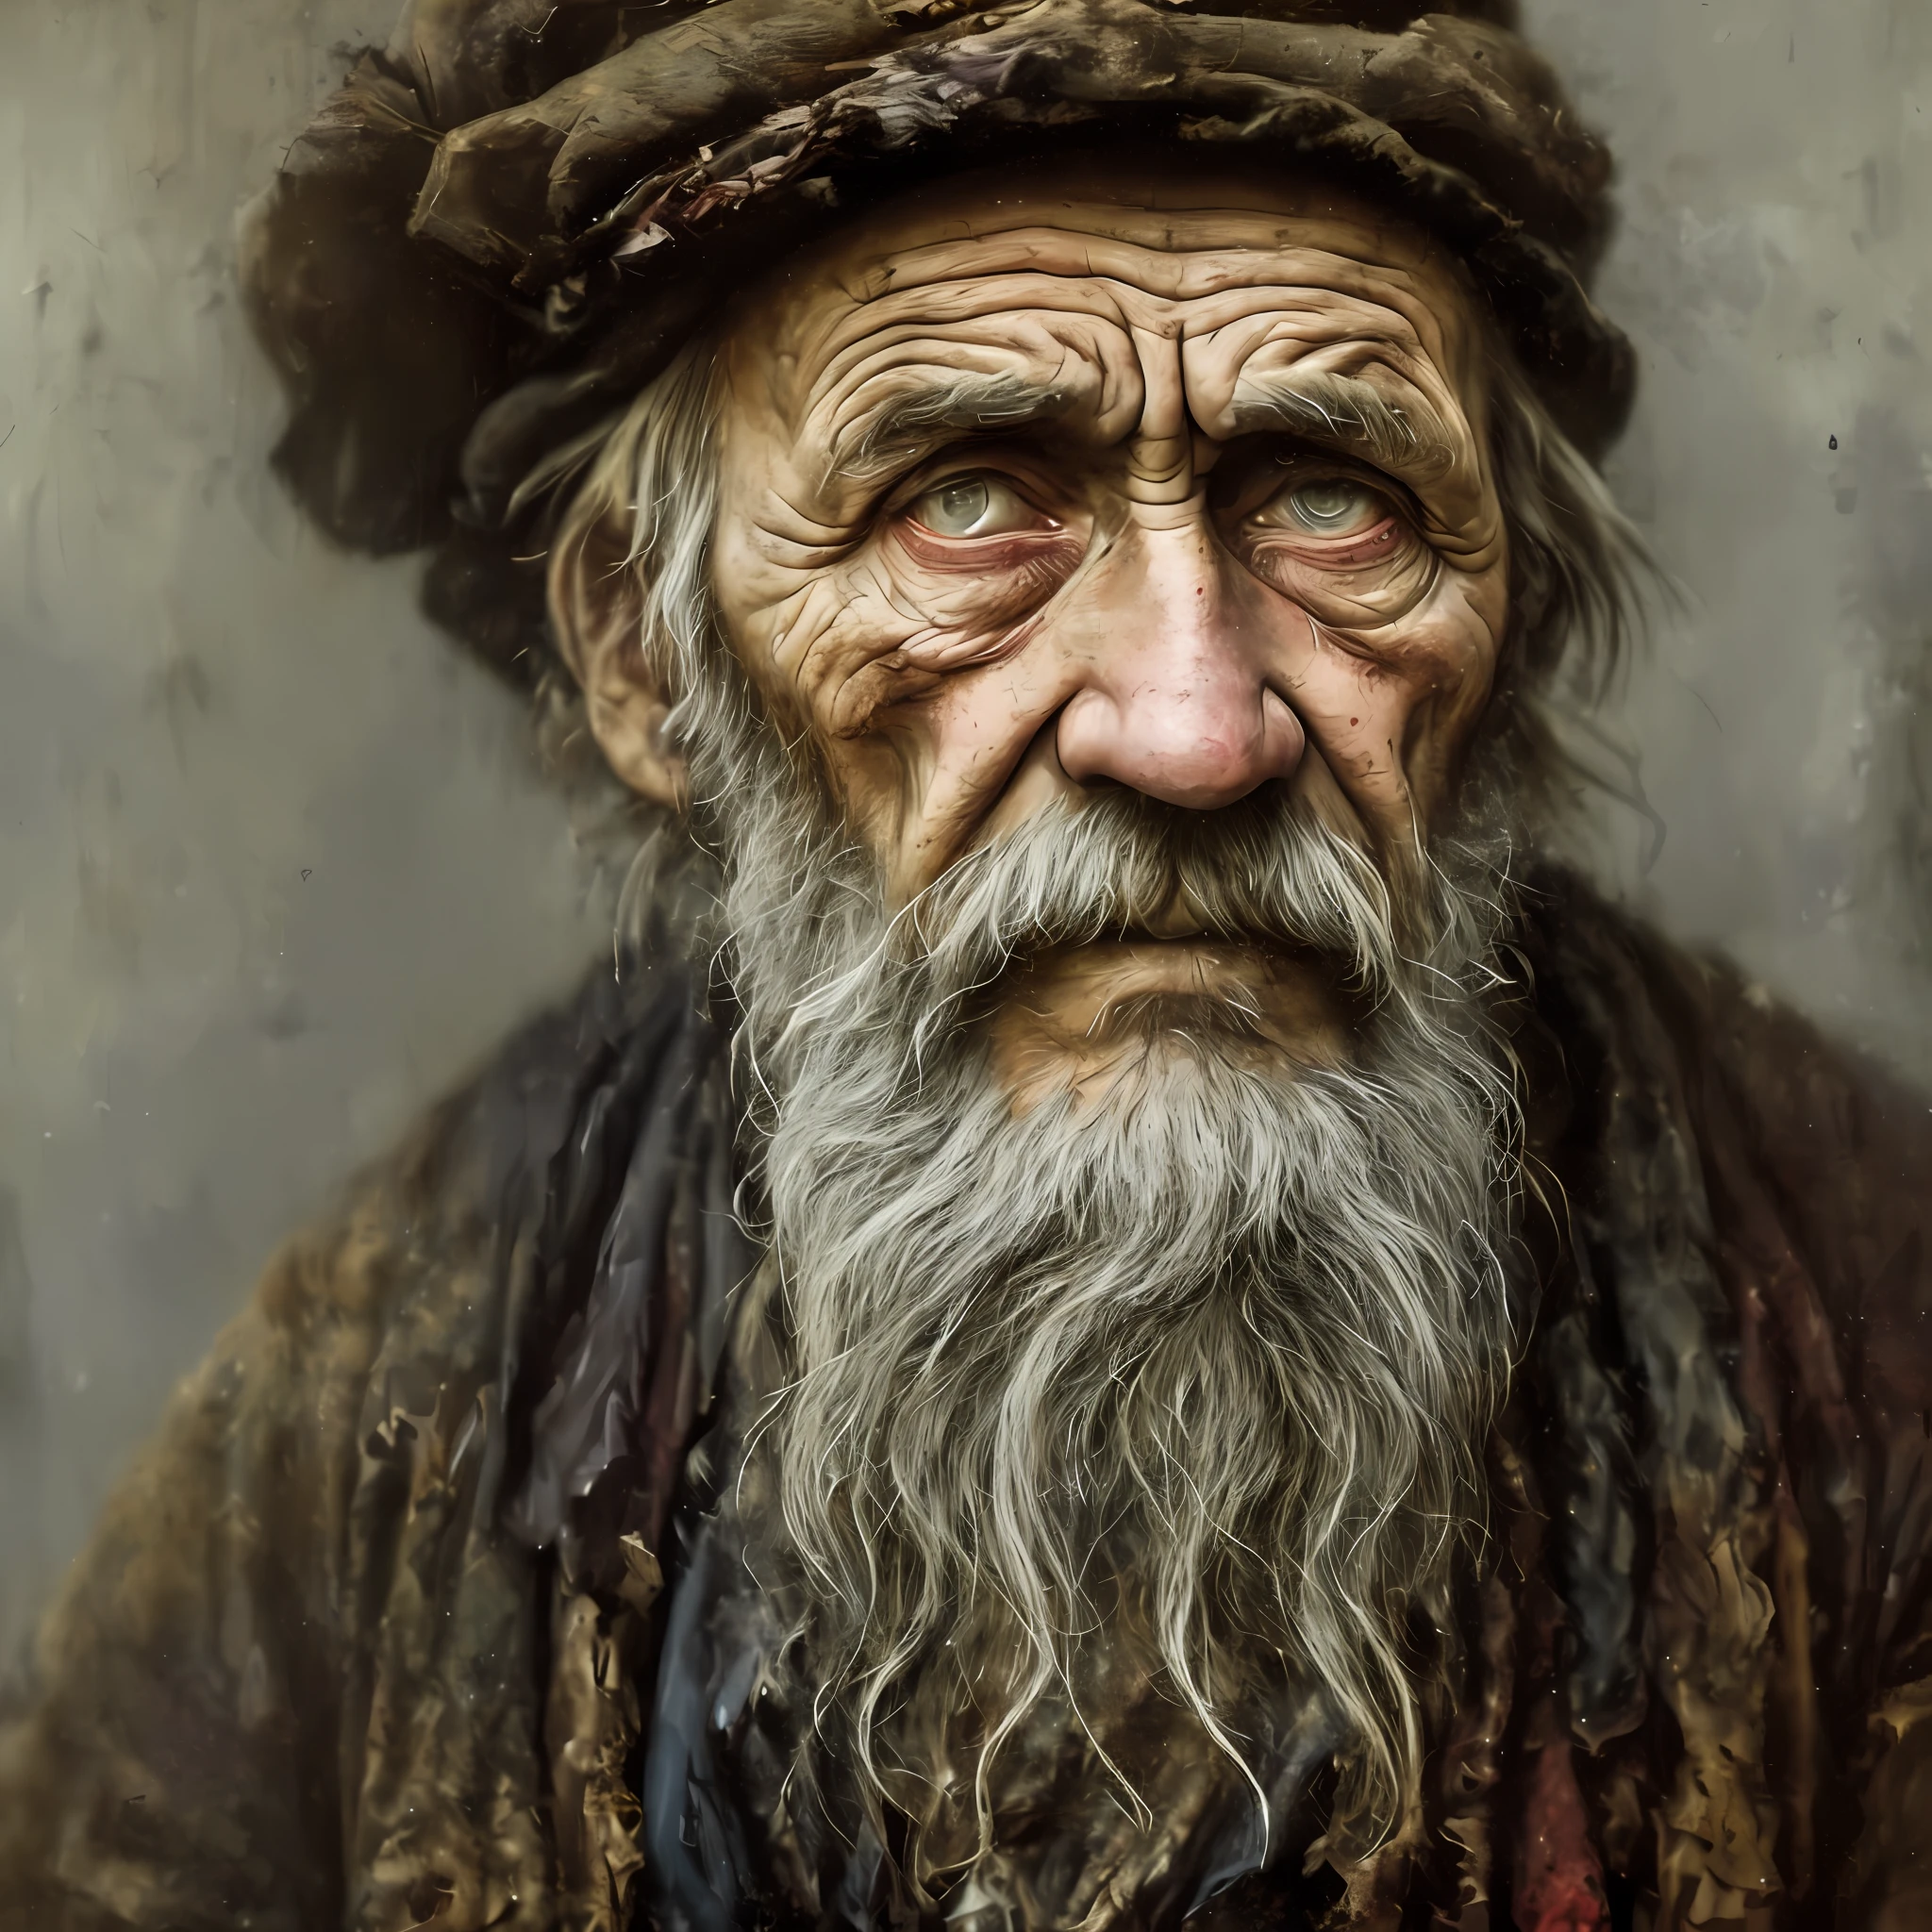 Um retrato do pobre trabalhador russo de 1800, em trapos, ((fadiga avassaladora )), rugas da idade, arte conceitual, Pintura pastel a óleo , cores cinza temperamentais , corajoso, estilo bagunçadoestilo de Alexey Savrasov, Ivan Shichkin, Ilya Repin, (cel sombreado:1.2), 2d, (Pintura a óleo:1.2) altamente detalhado